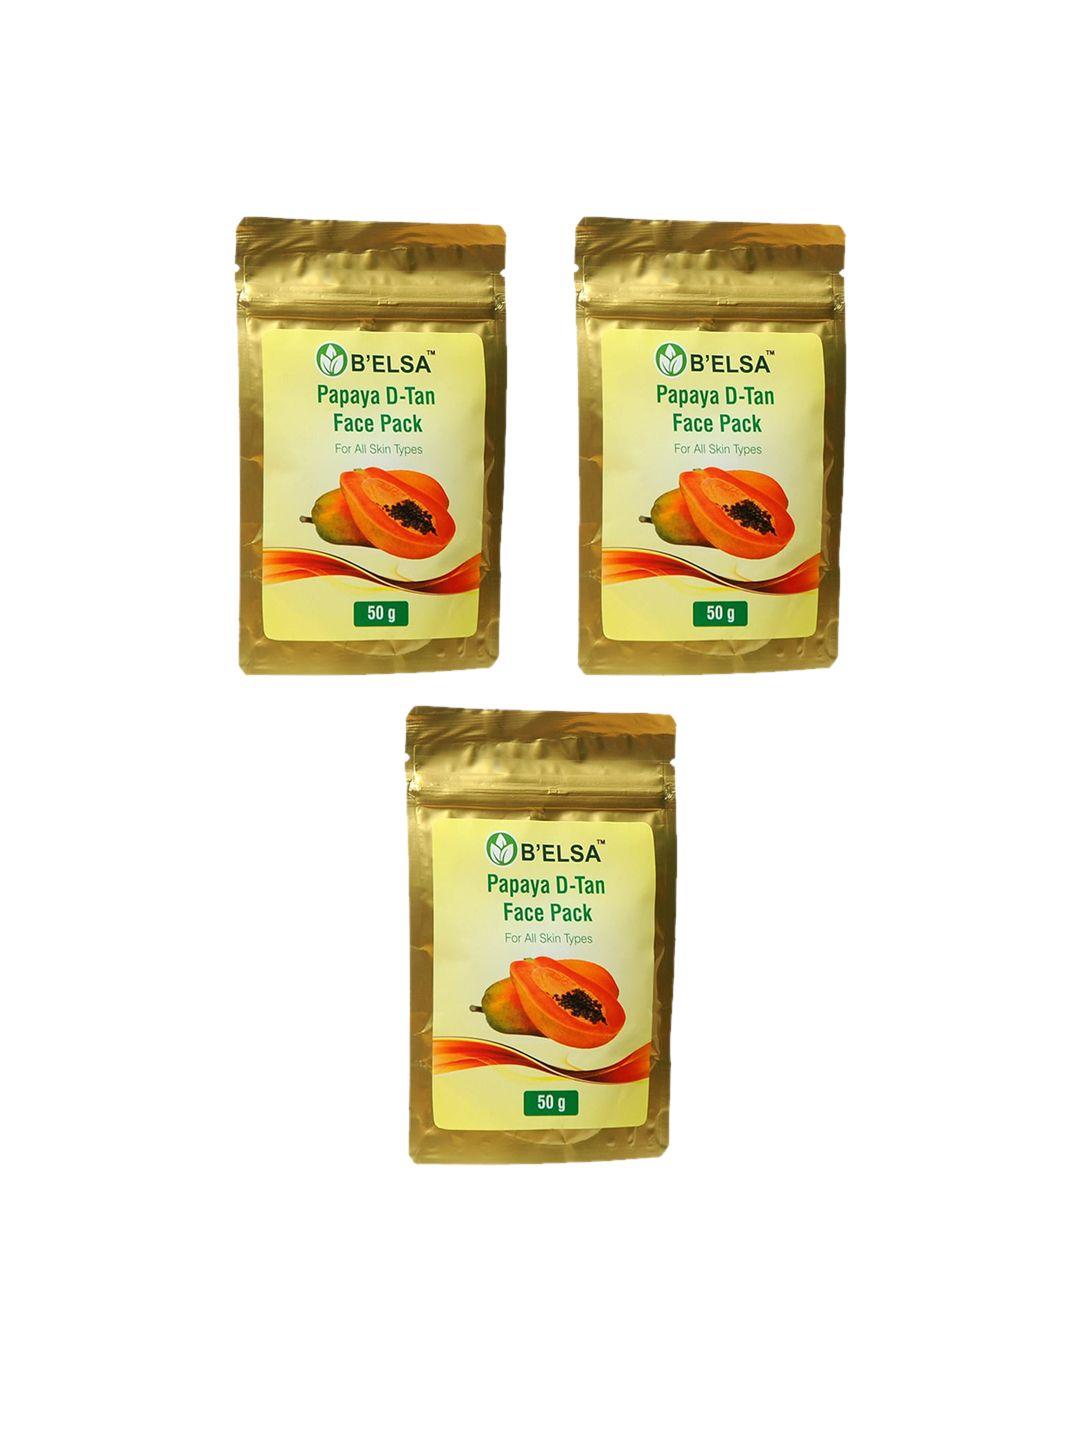 b'elsa herbal set of 3 papaya d-tan face pack for all skin types - 50 g each